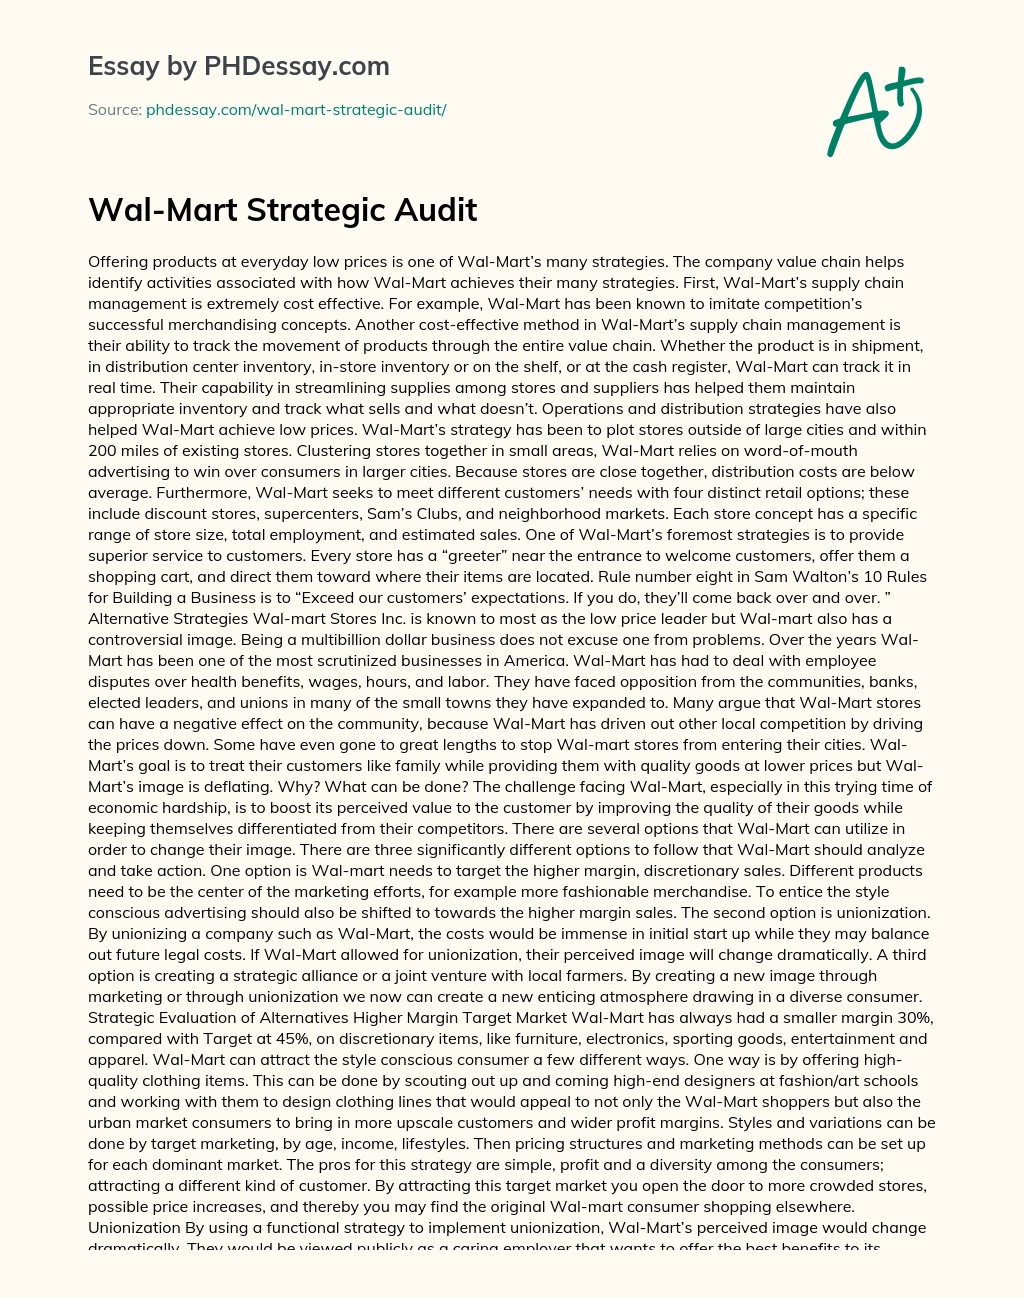 Wal-Mart Strategic Audit essay